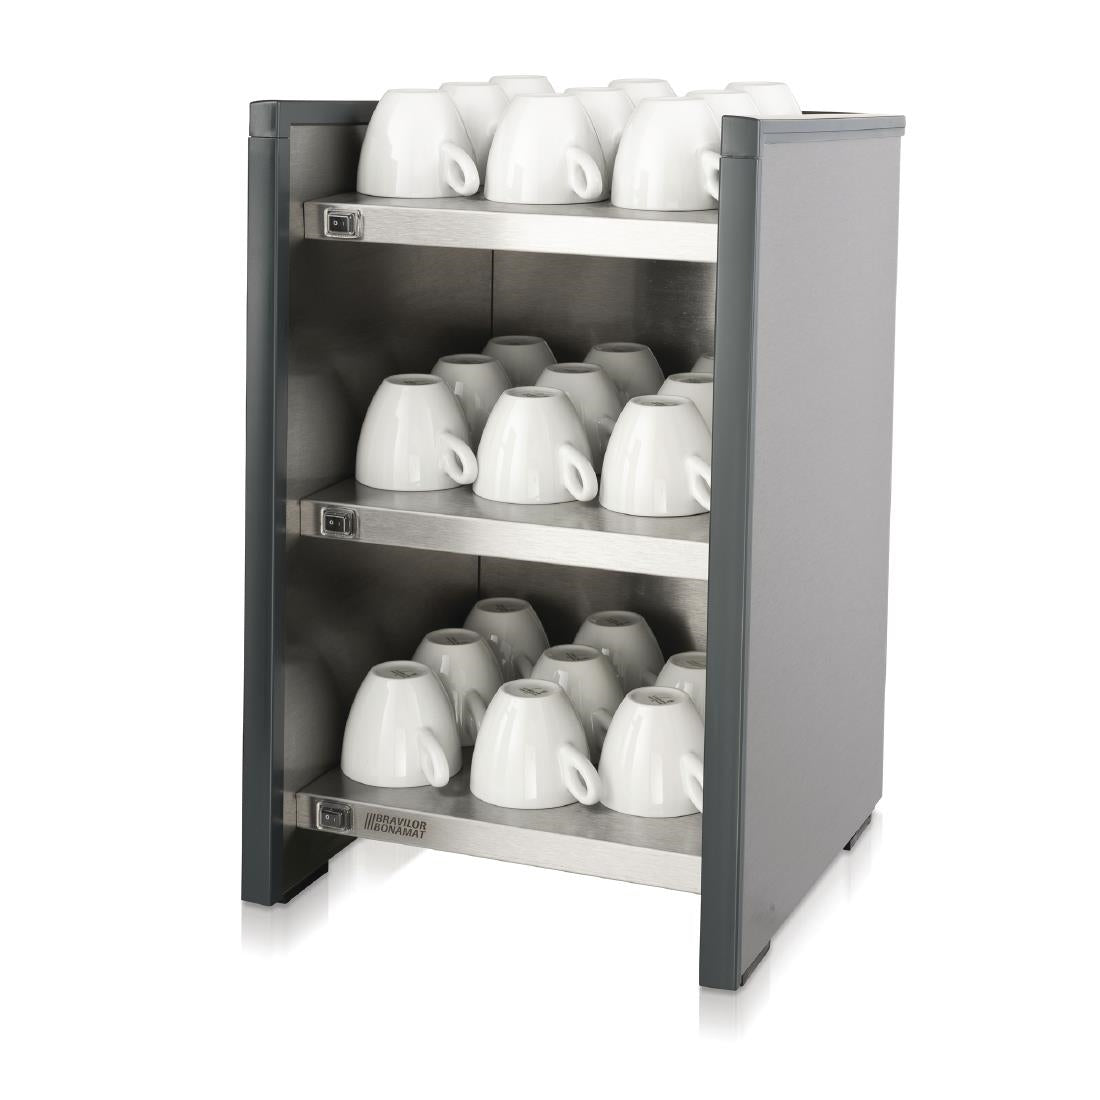 Bravilor 3 Shelf Cup Warmer WHK JD Catering Equipment Solutions Ltd